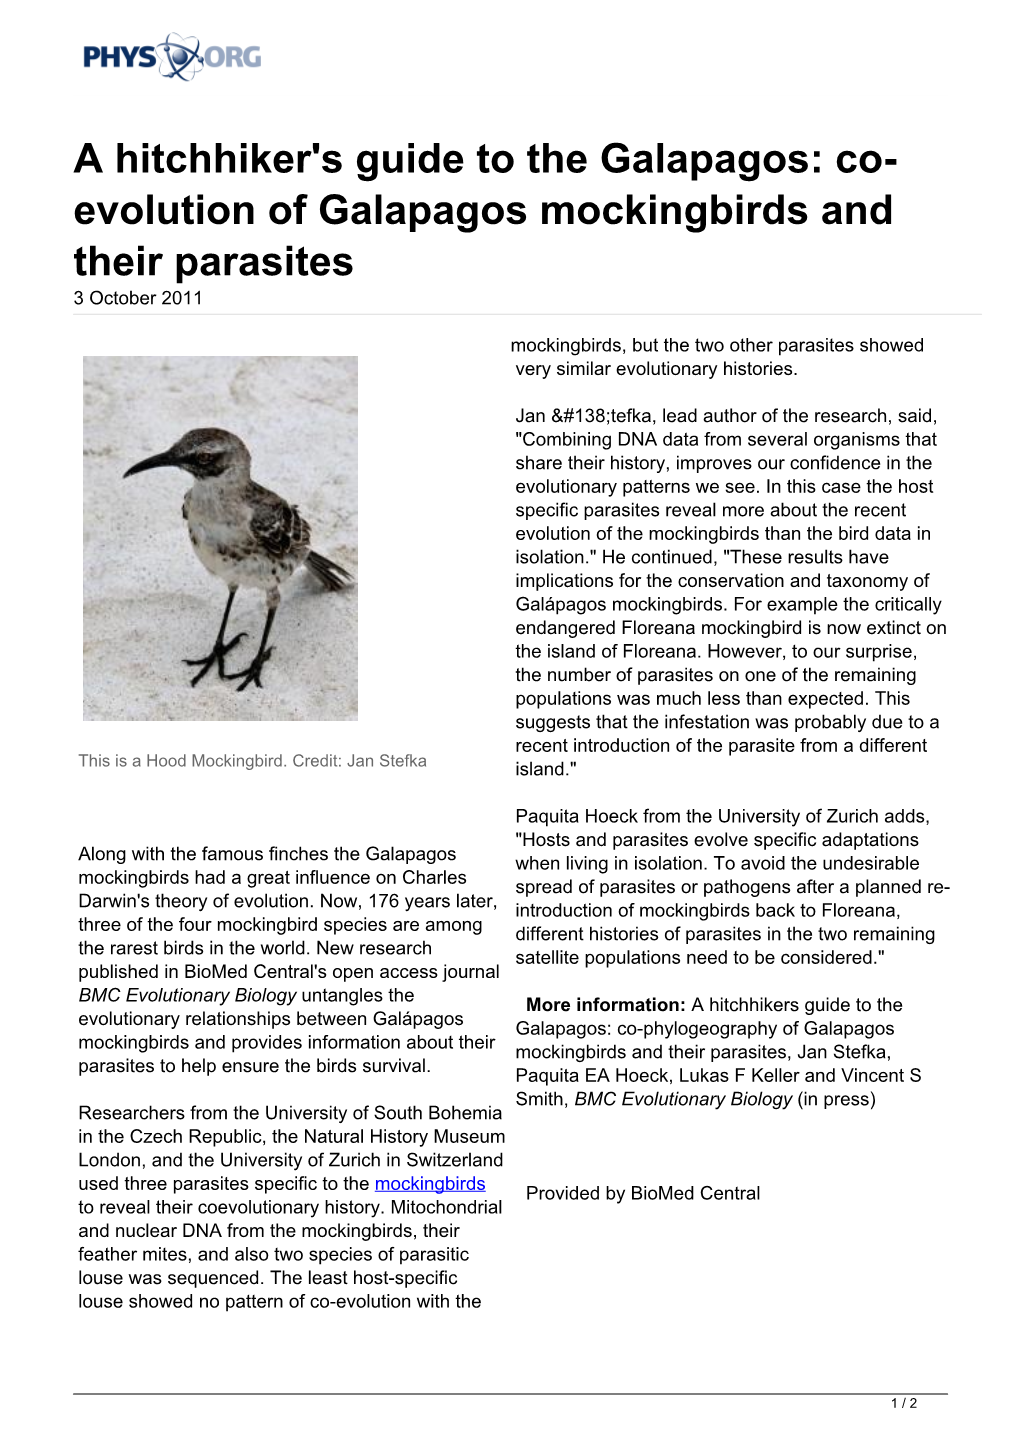 Evolution of Galapagos Mockingbirds and Their Parasites 3 October 2011